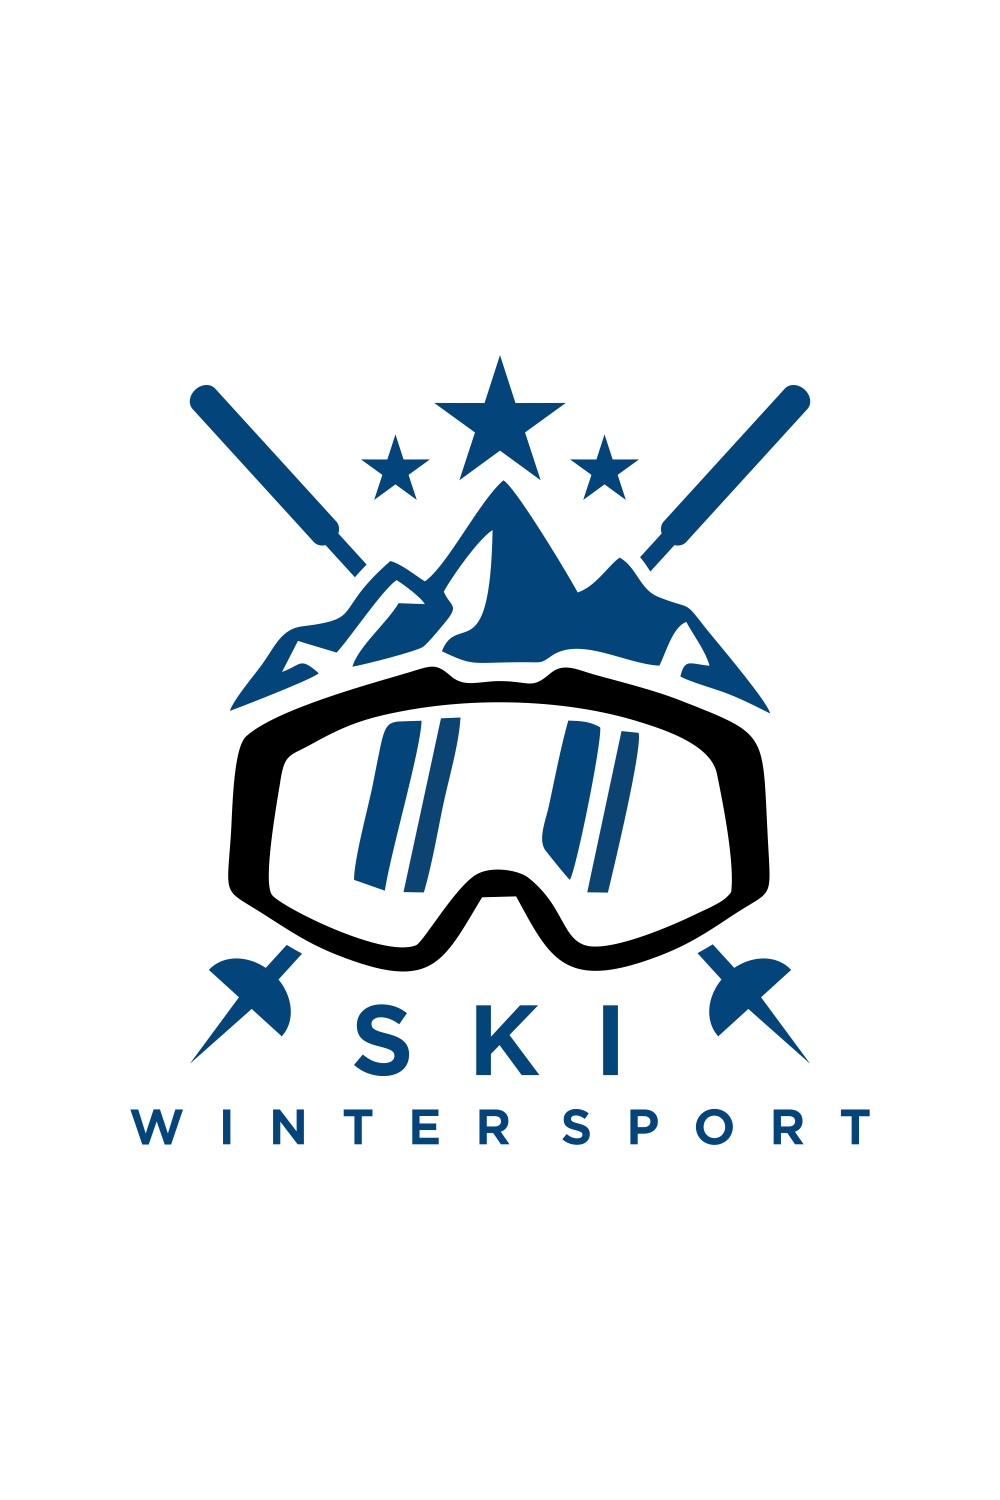 Skiing or winter sport logo emblem, design element Vector illustration Monochrome Graphic Art Concept for shirts, pinterest preview image.